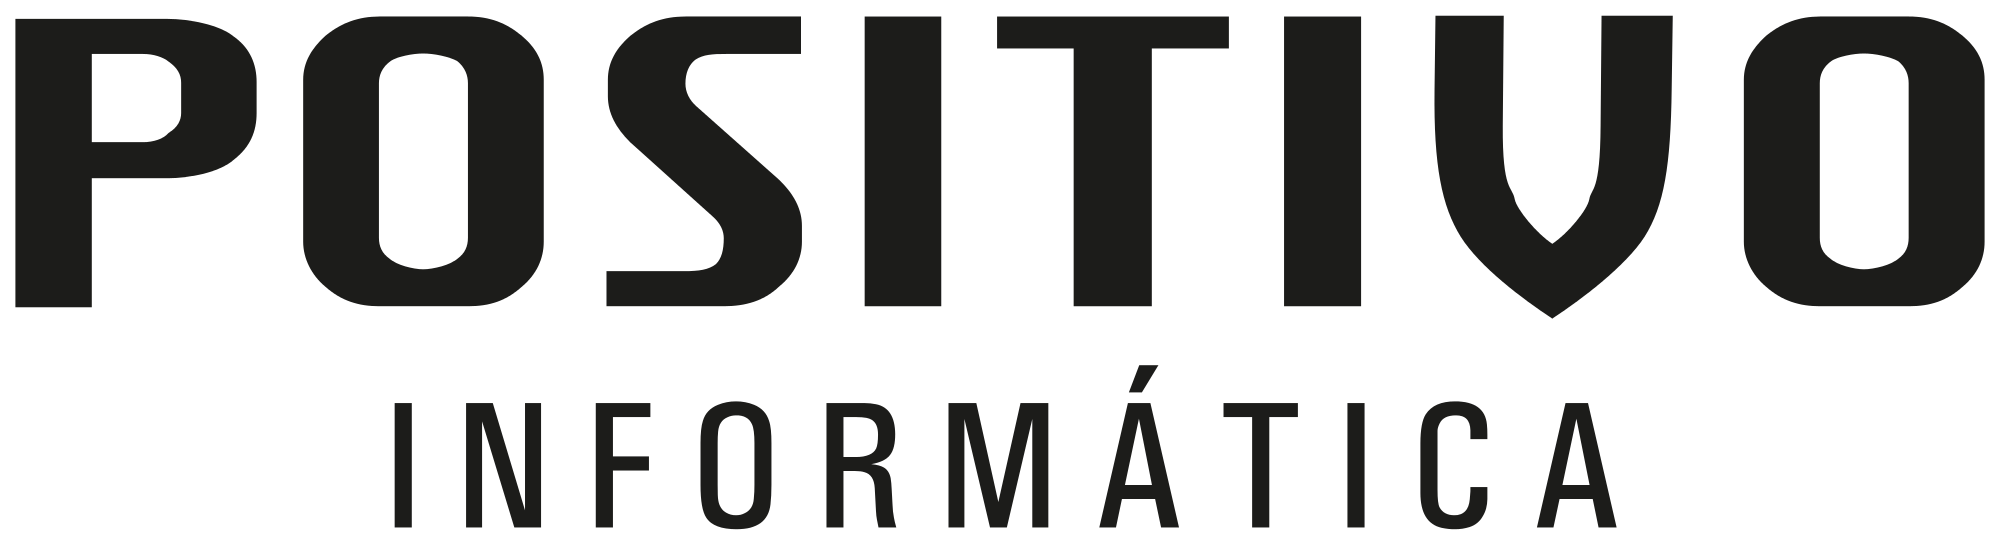 Informatica Logo - Positivo Informática logo.svg